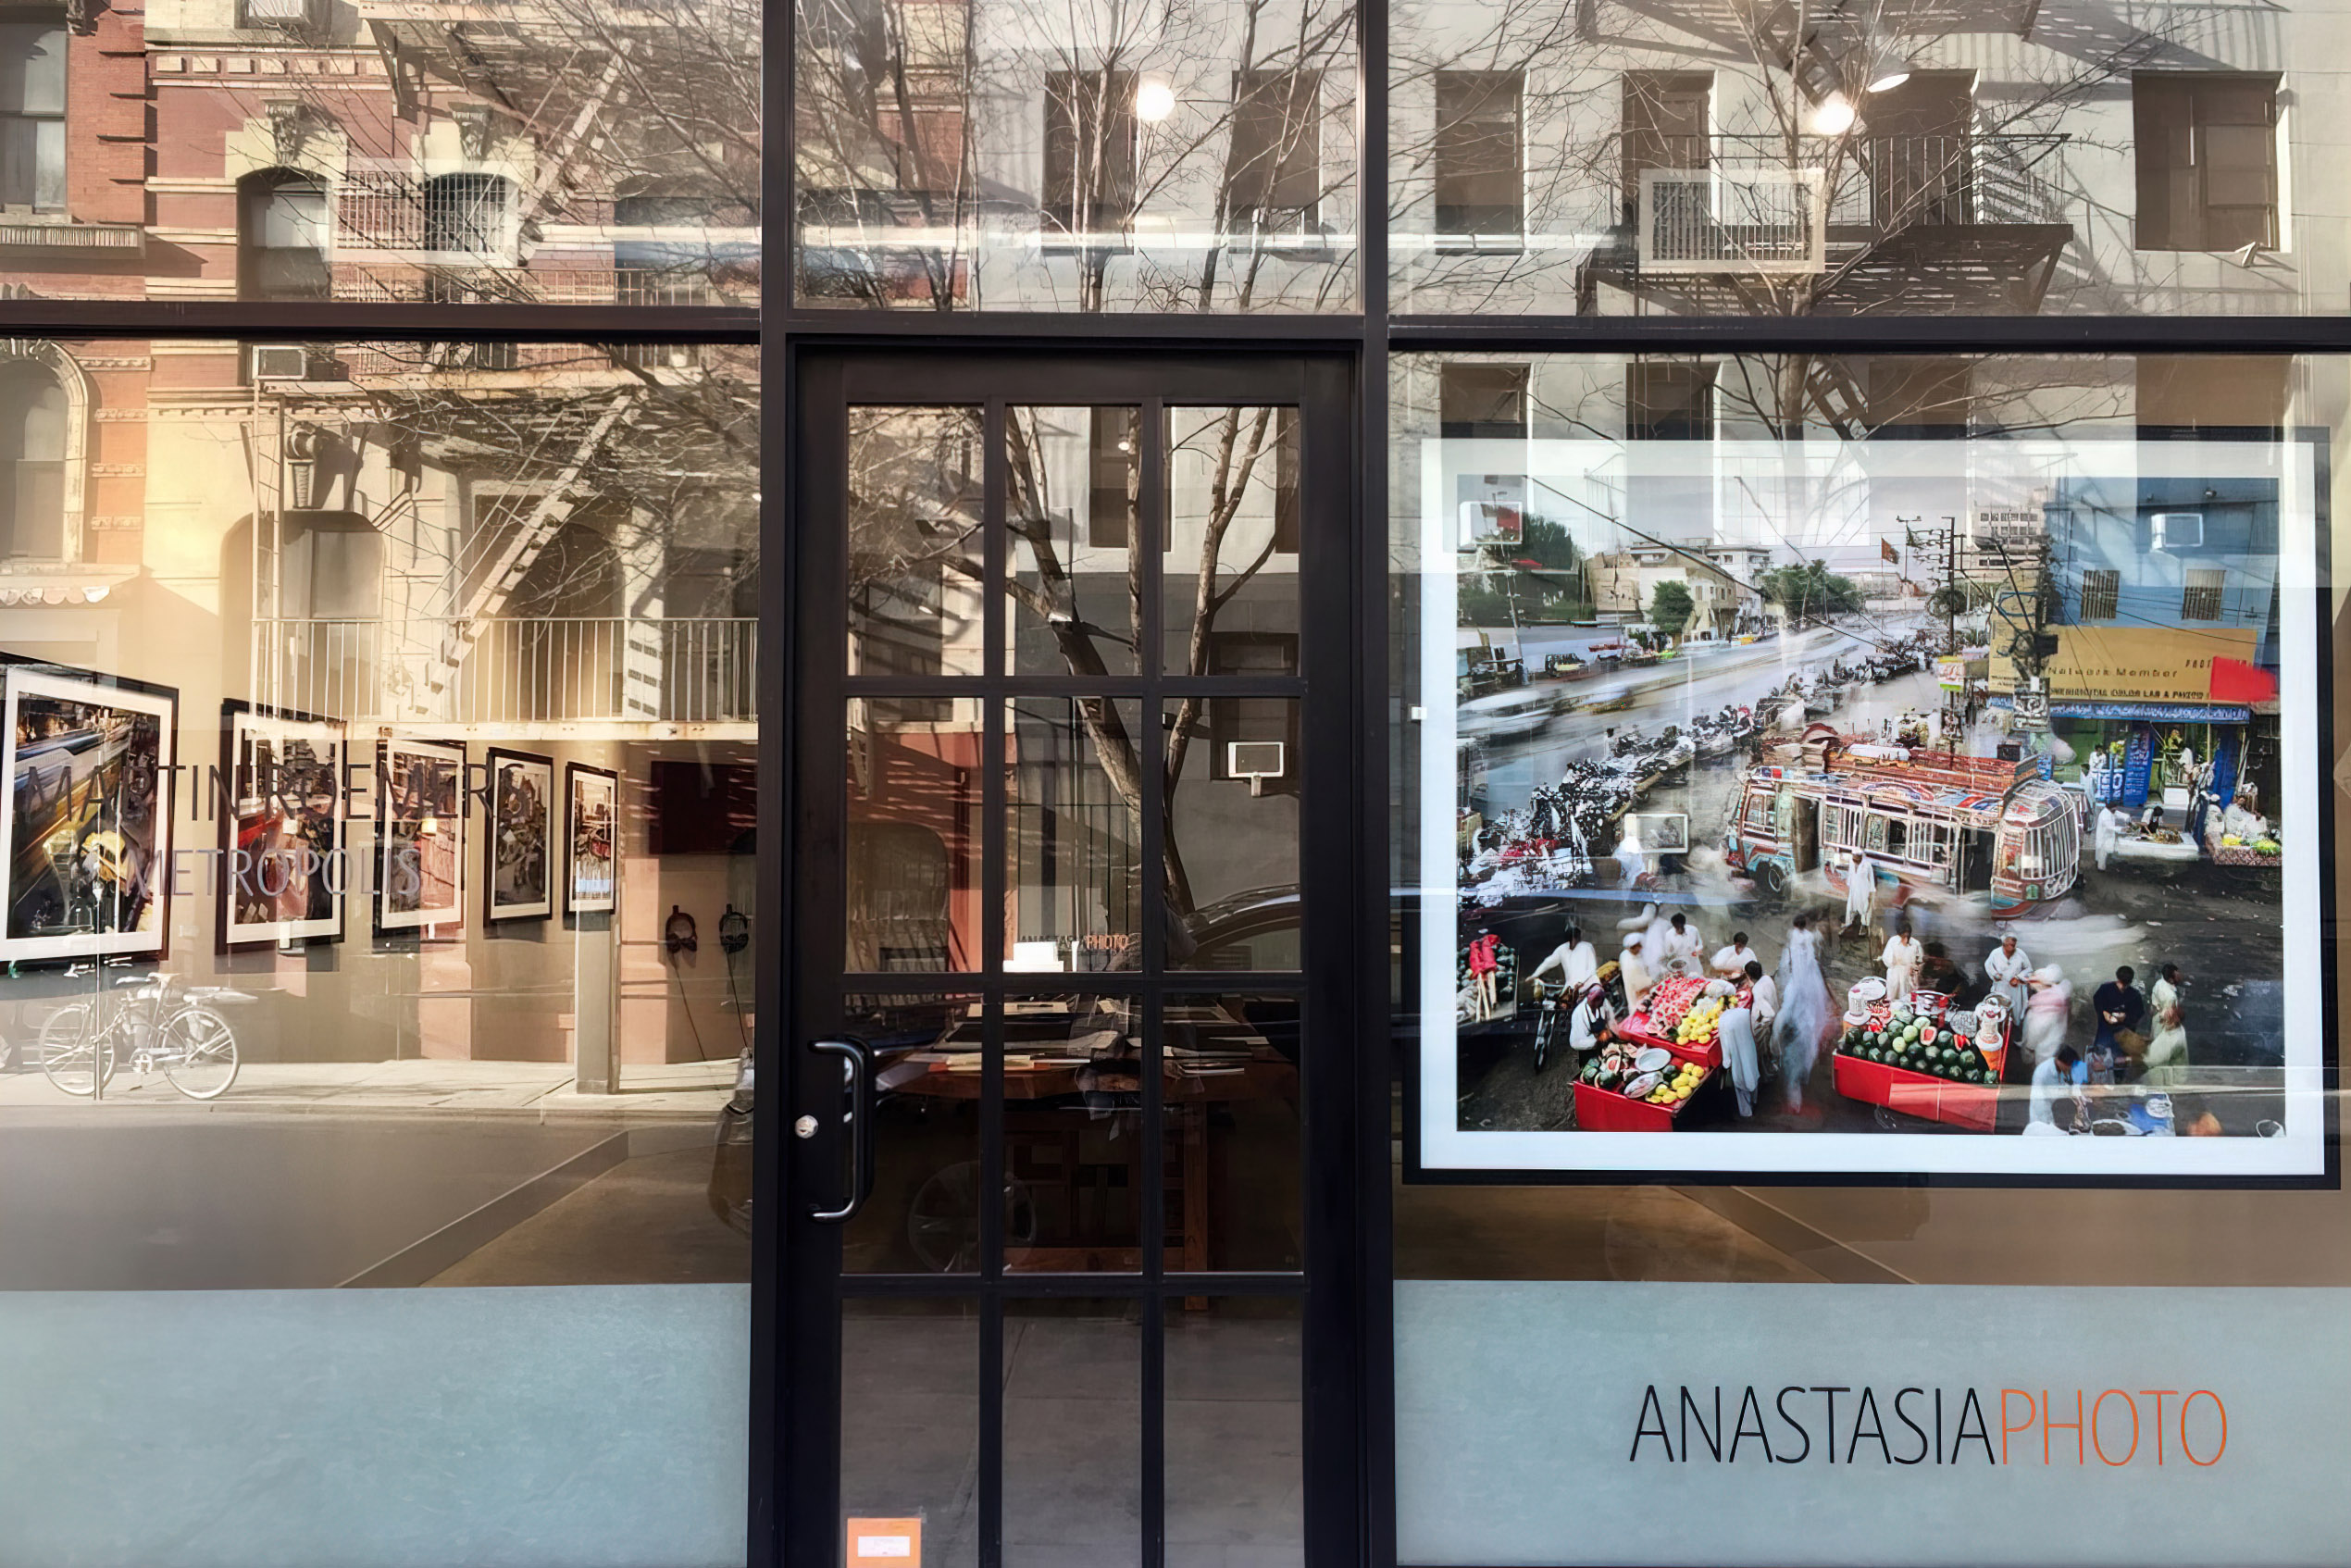 Anastasia Photo Gallery, New York City